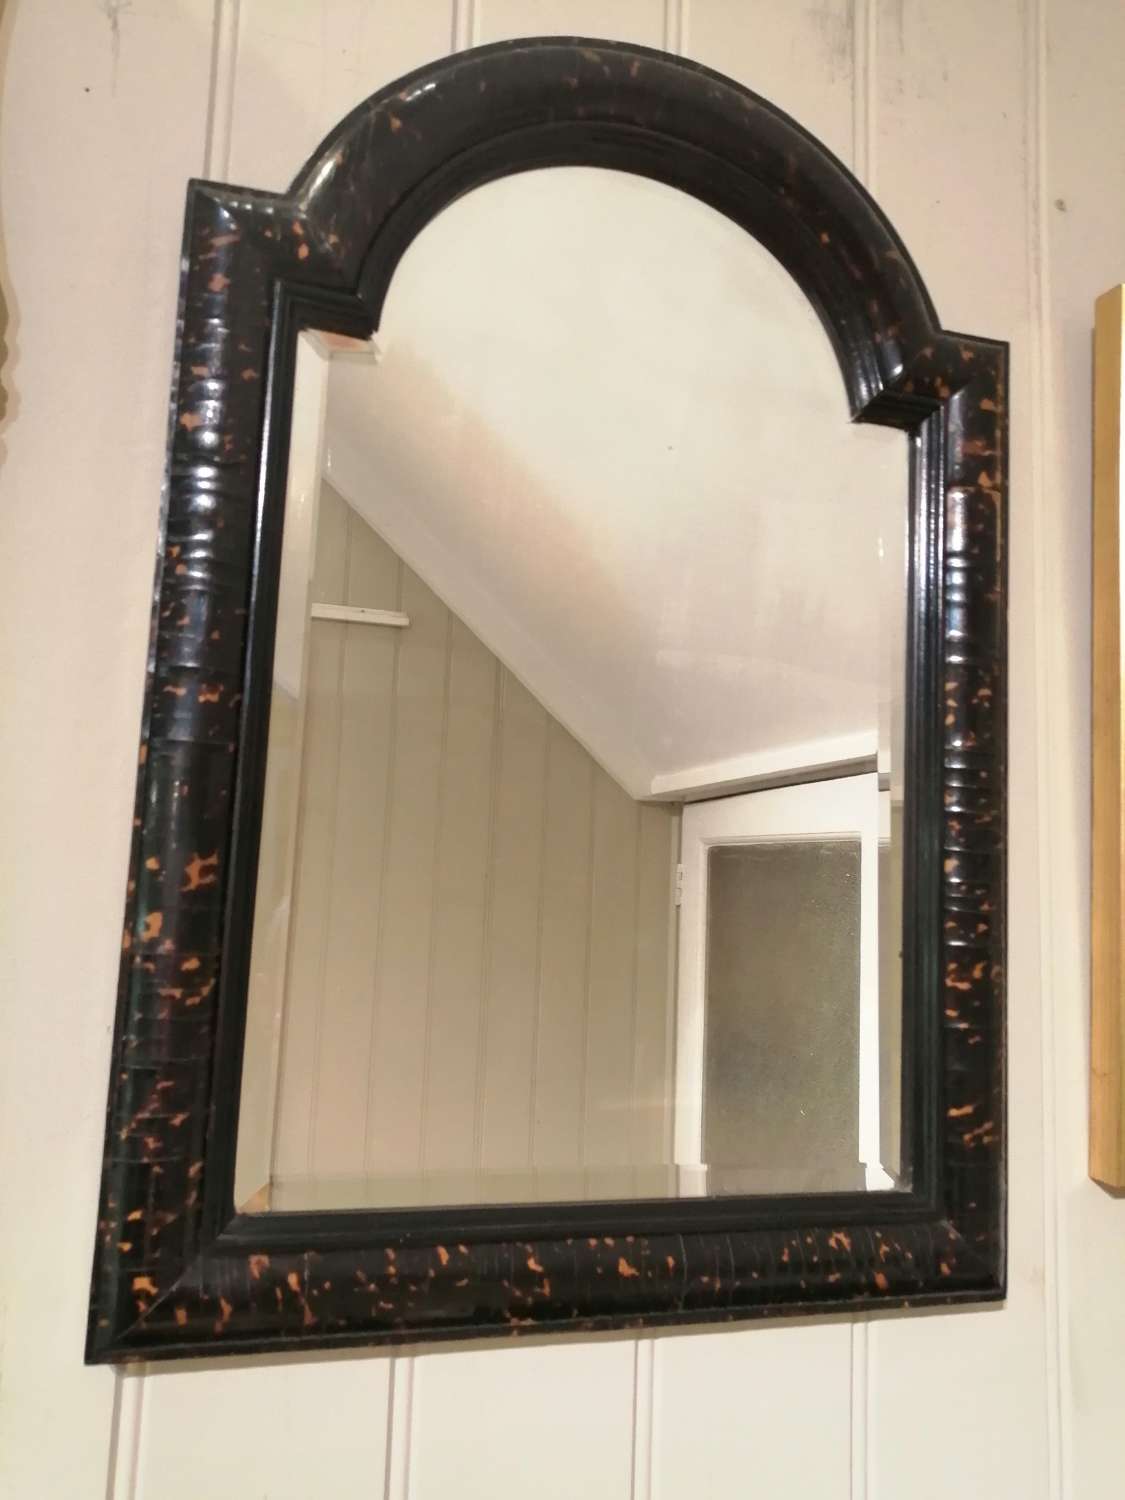 A fantastic quality tortoiseshell framed mirror